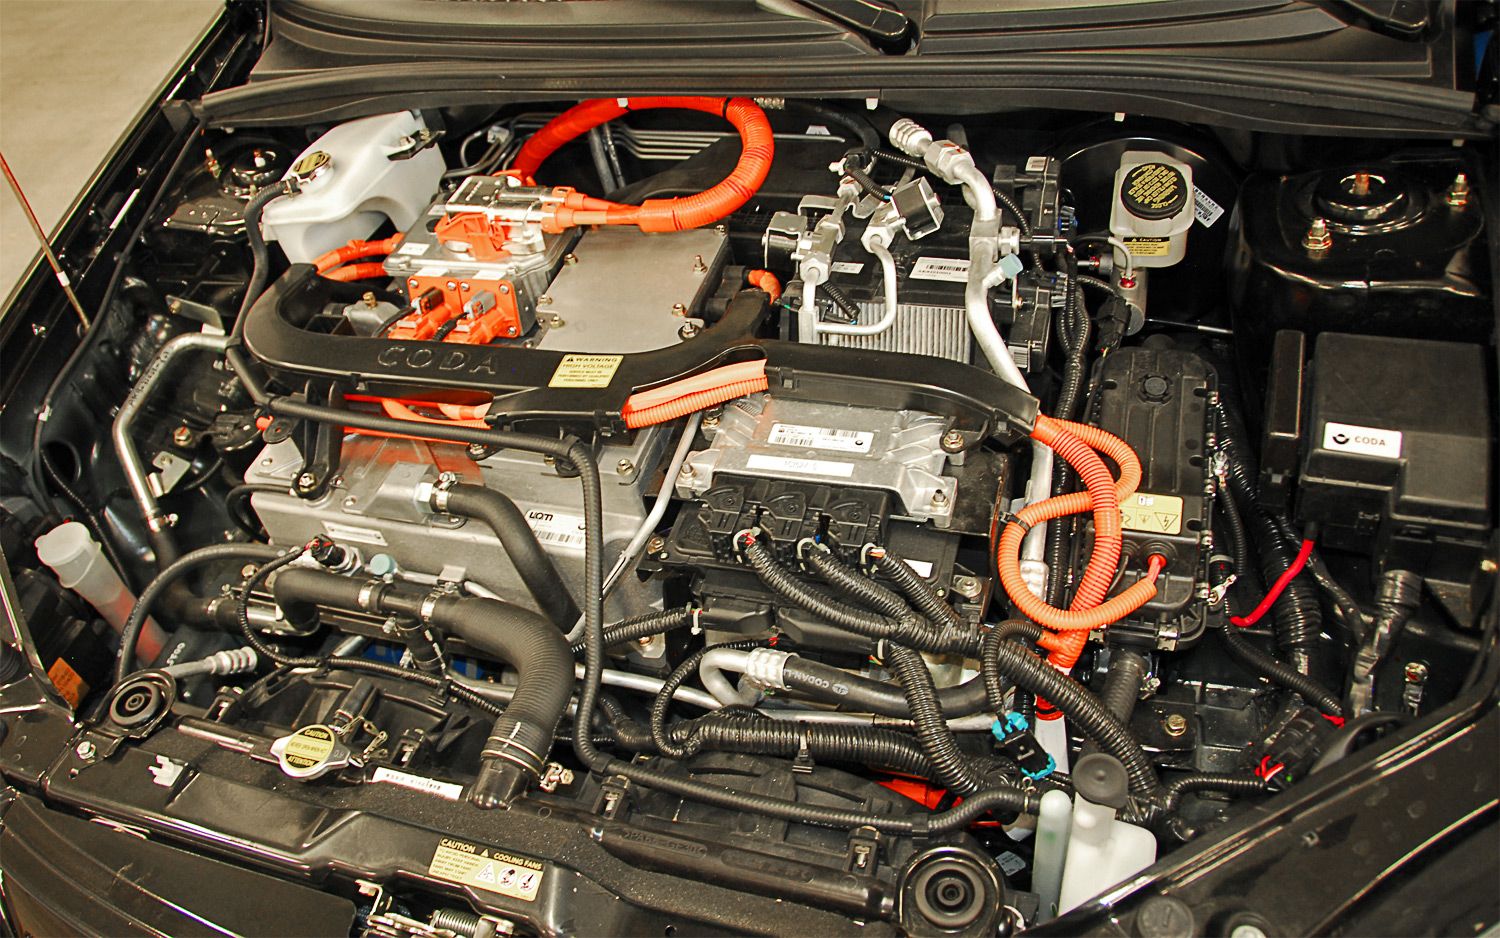 2012-Coda-engine-parts.jpg